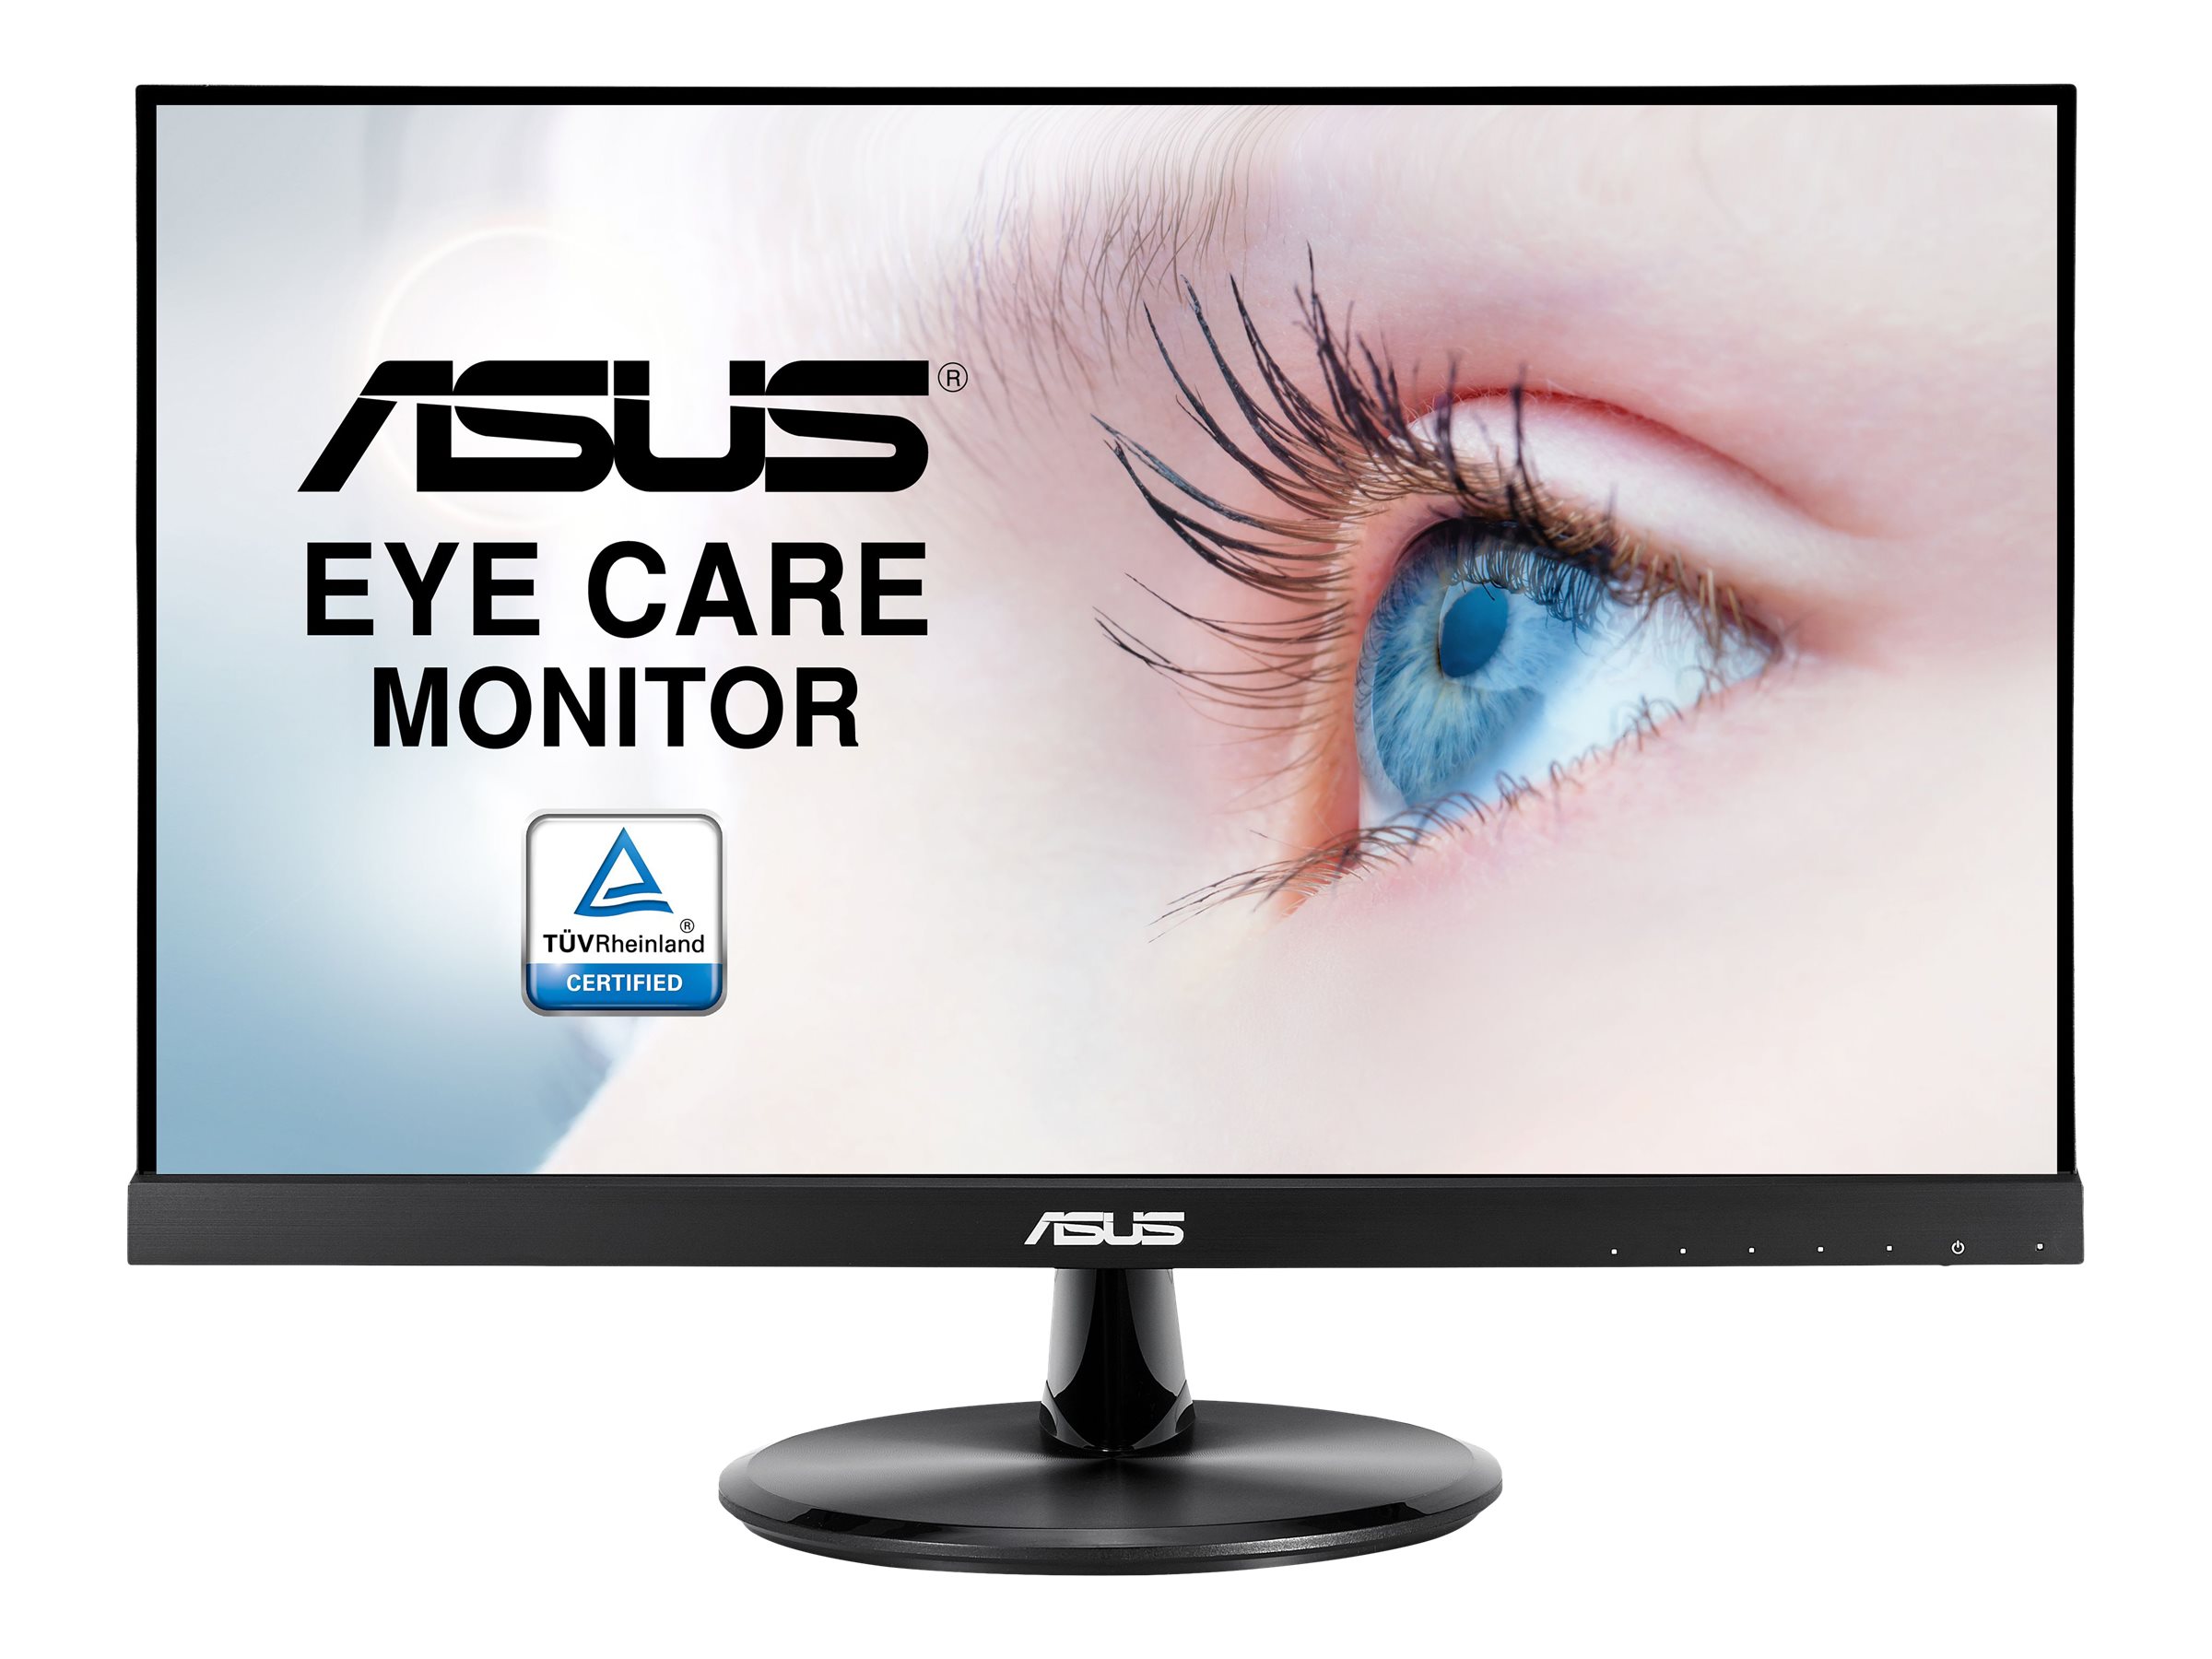 ASUS VP229HE - écran PC 21,5 LED - Full HD (1080p) Pas Cher